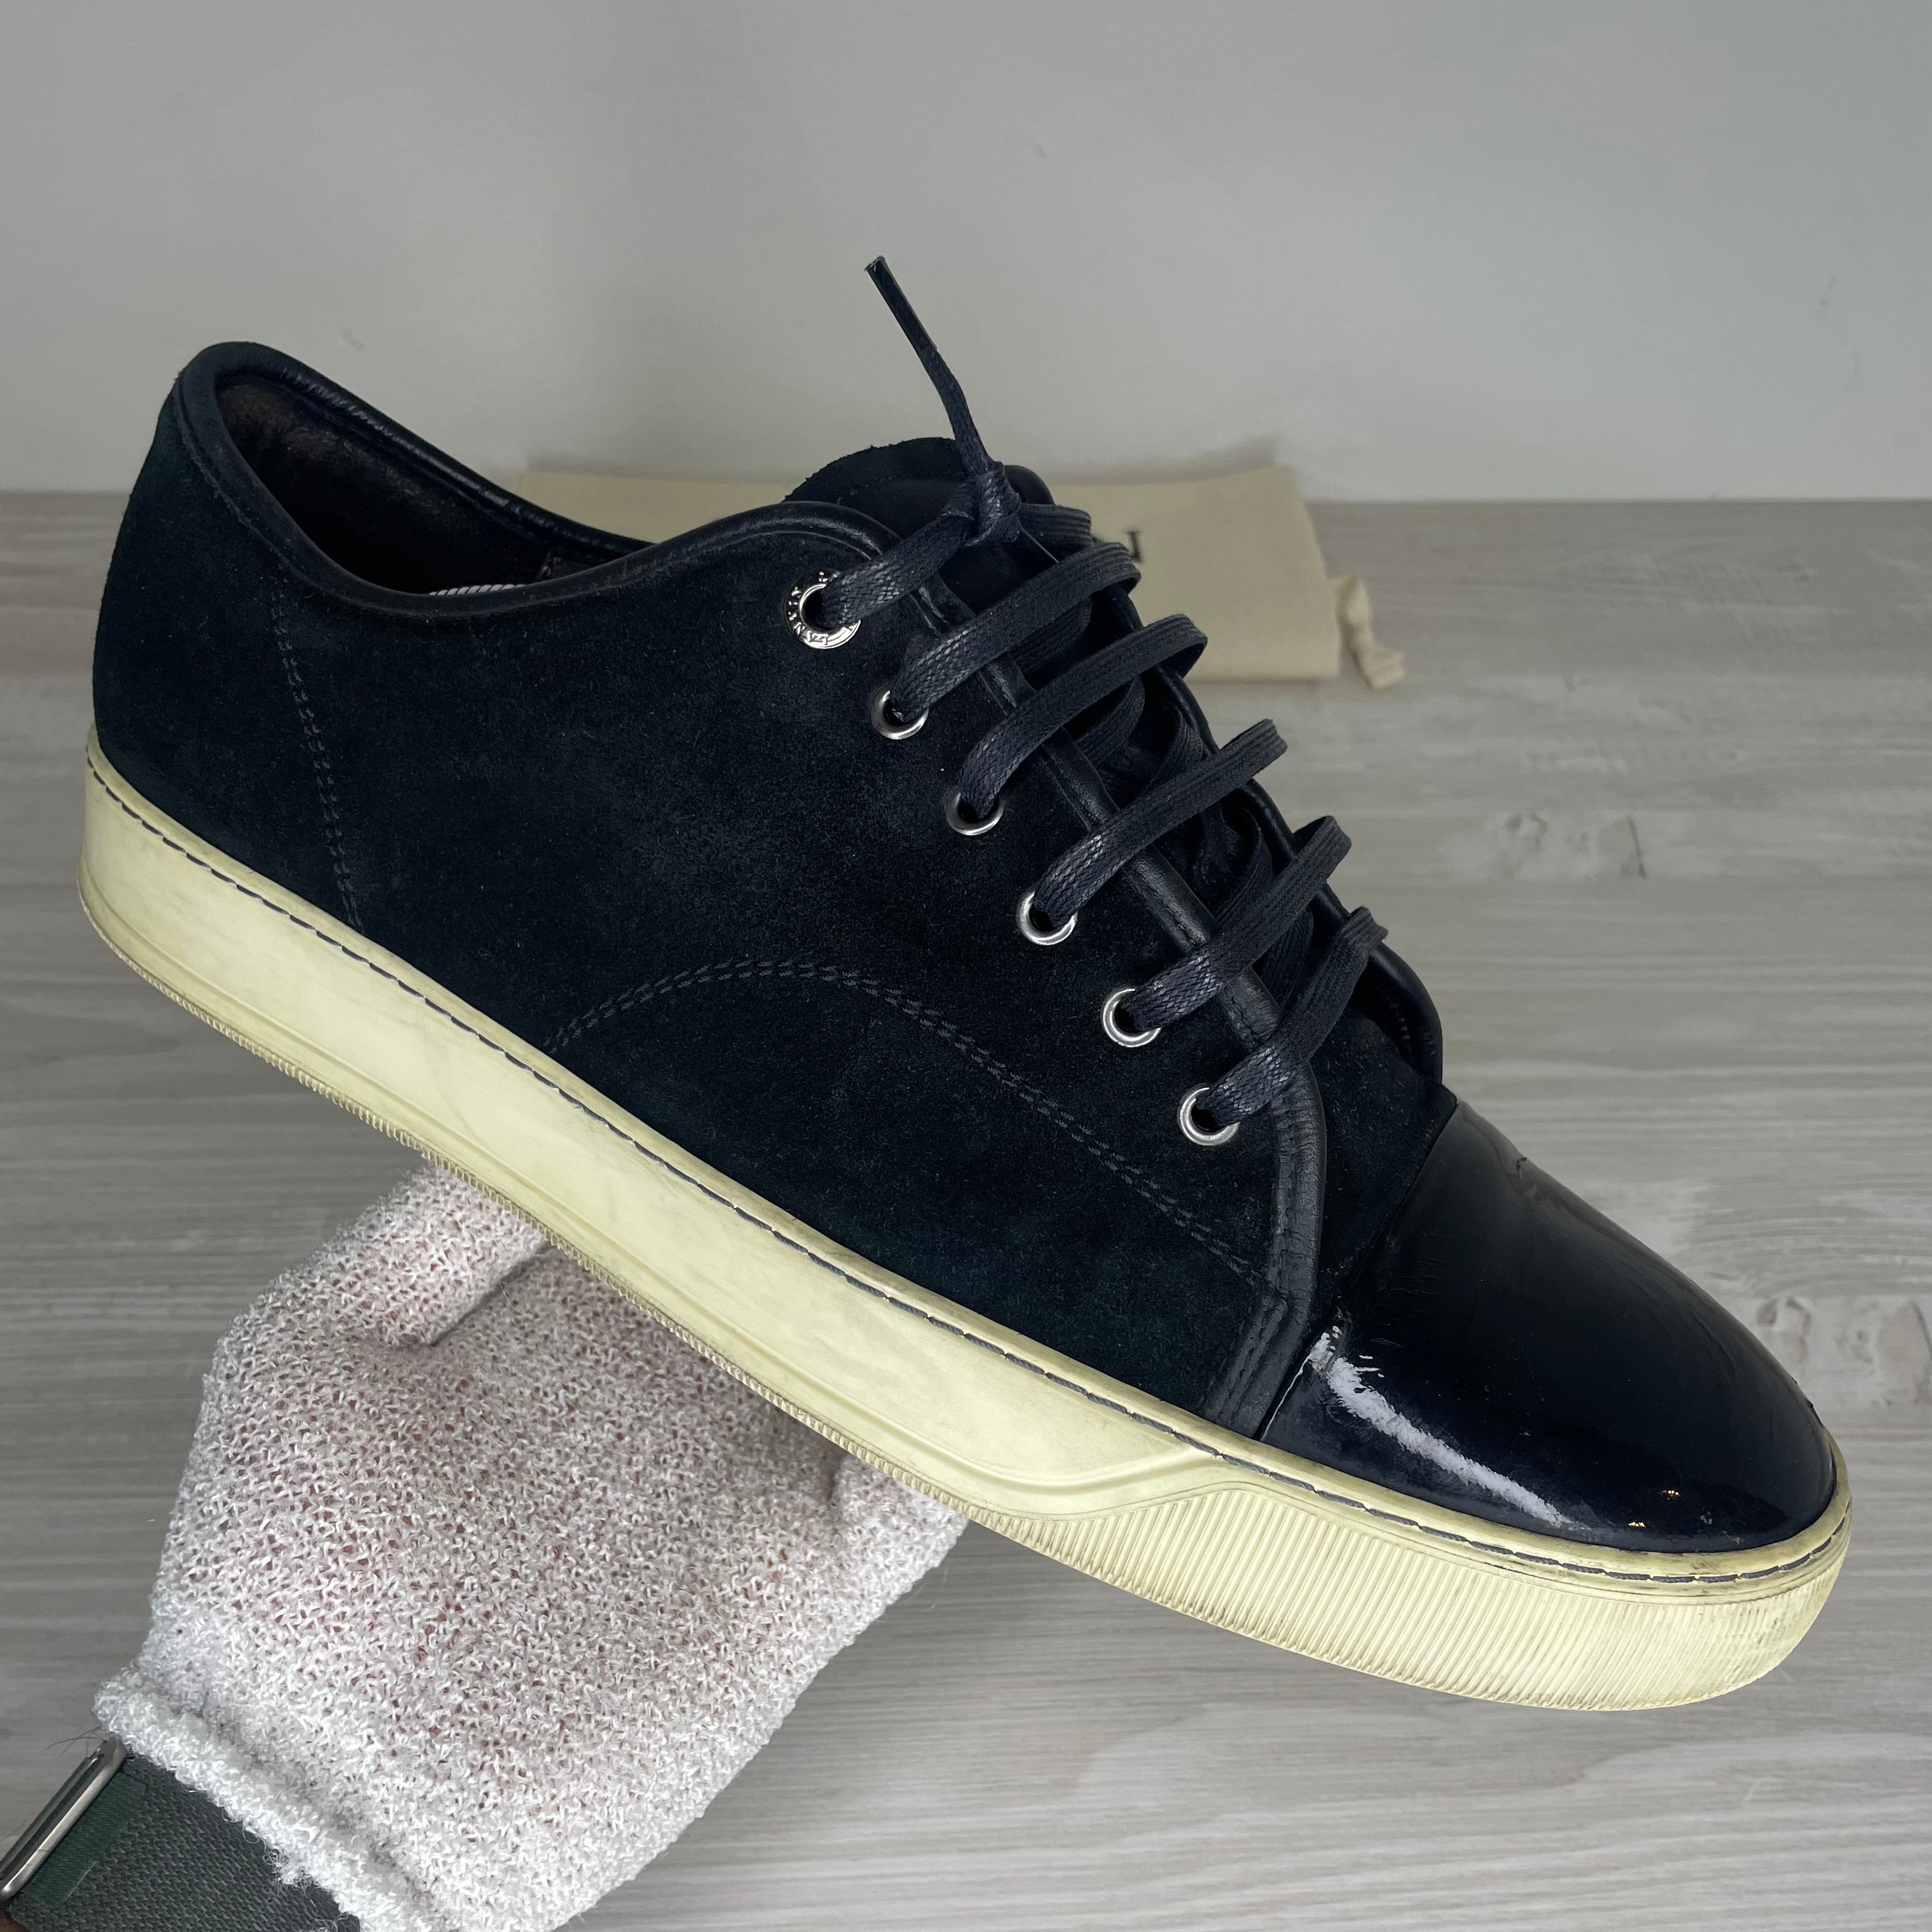 Lanvin Sneakers, 'Black Suede' Lak Toe (46)